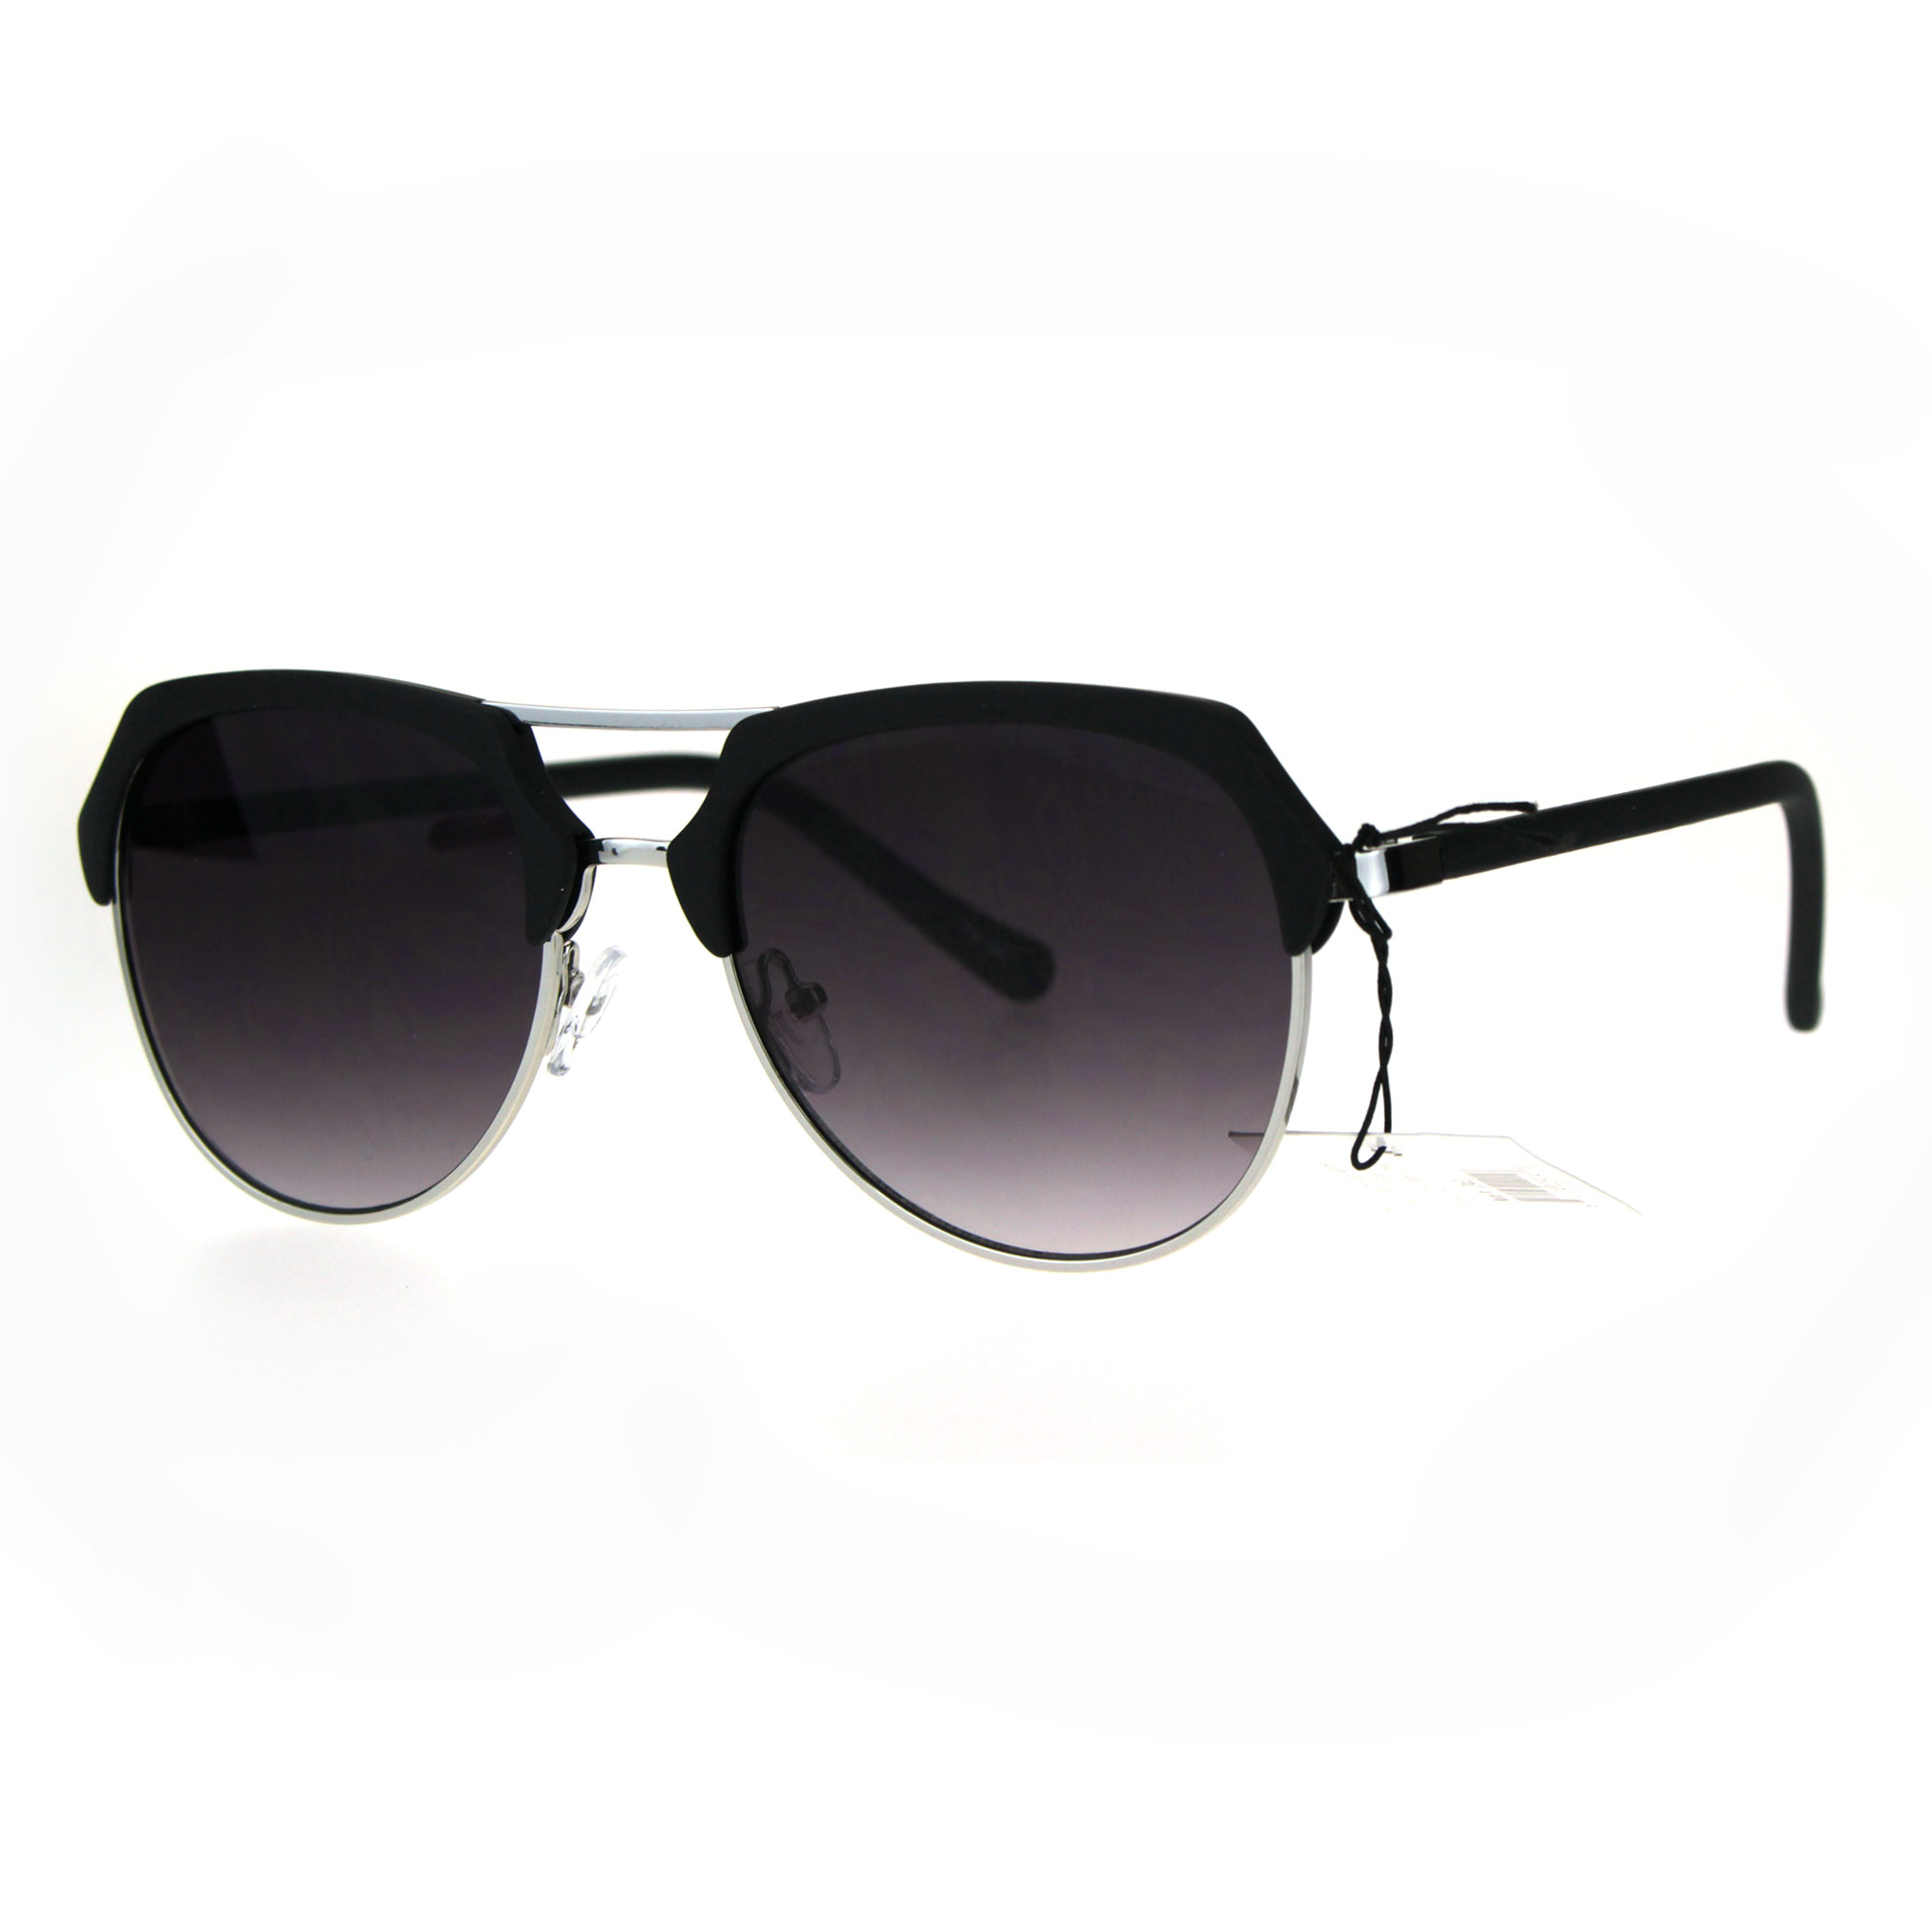 Retro Luxury Half Rim Fashion Sunglasses | eBay